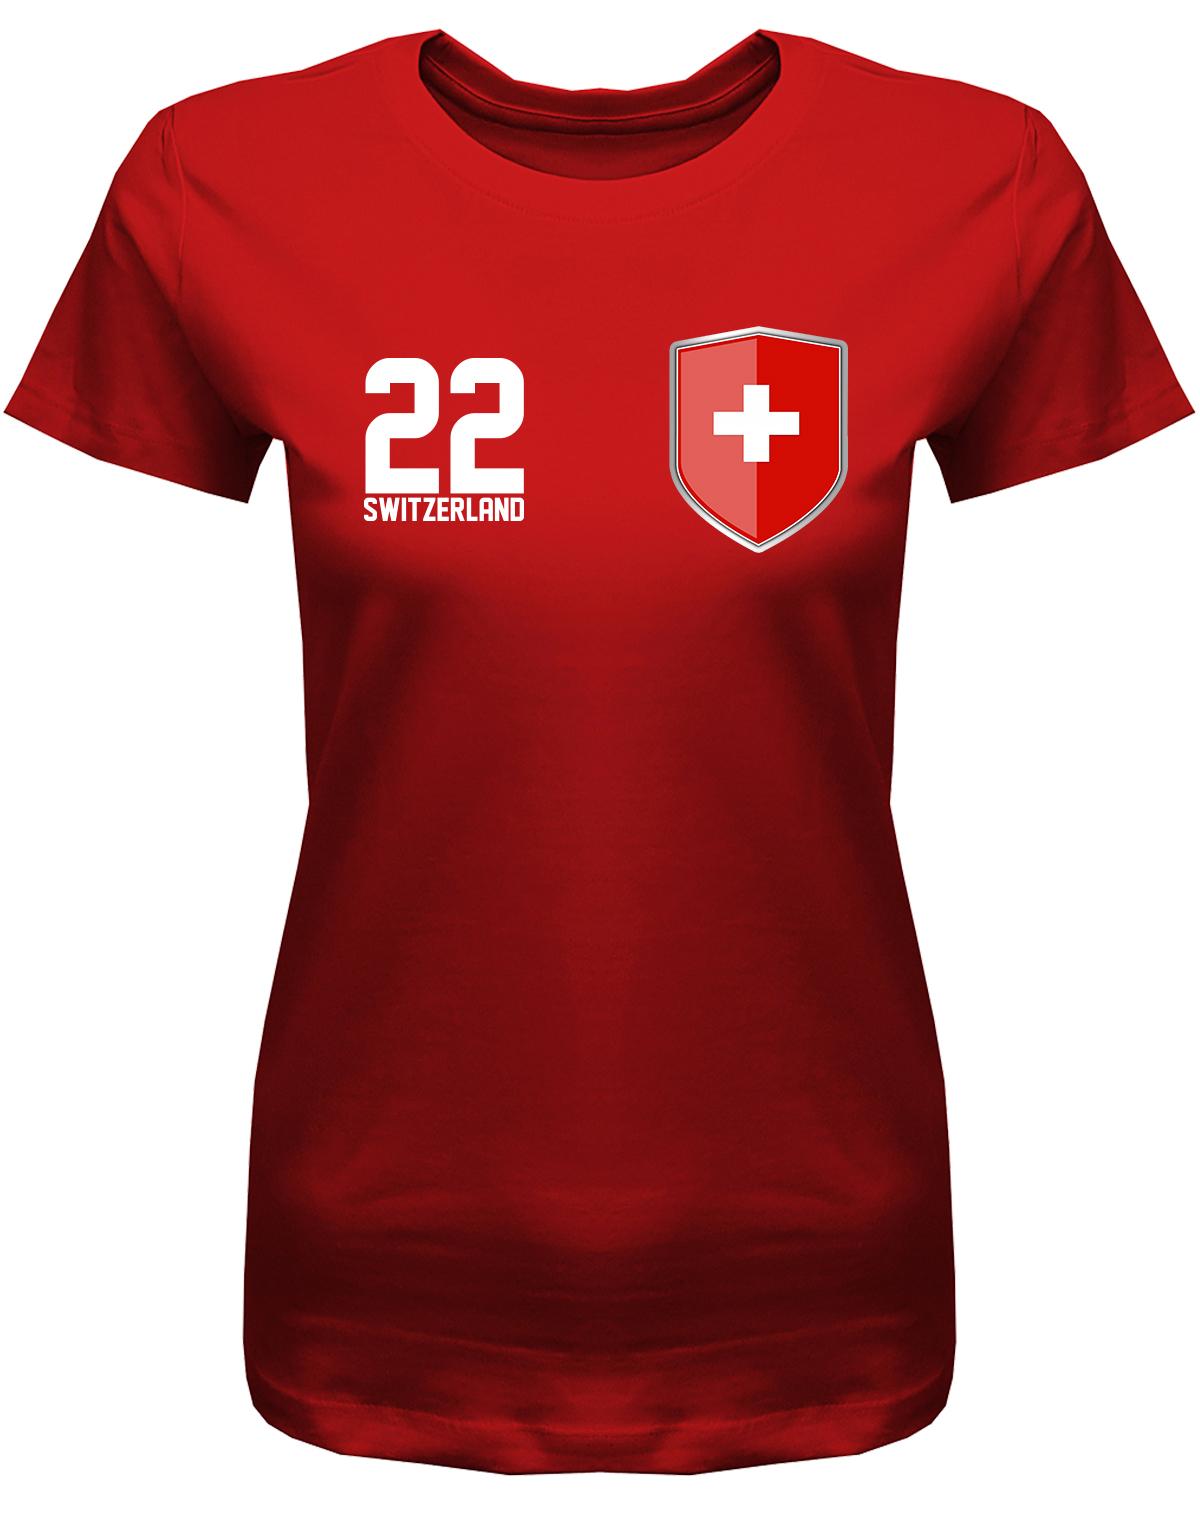 Switzerland-22-Wappen-Damen-Rot